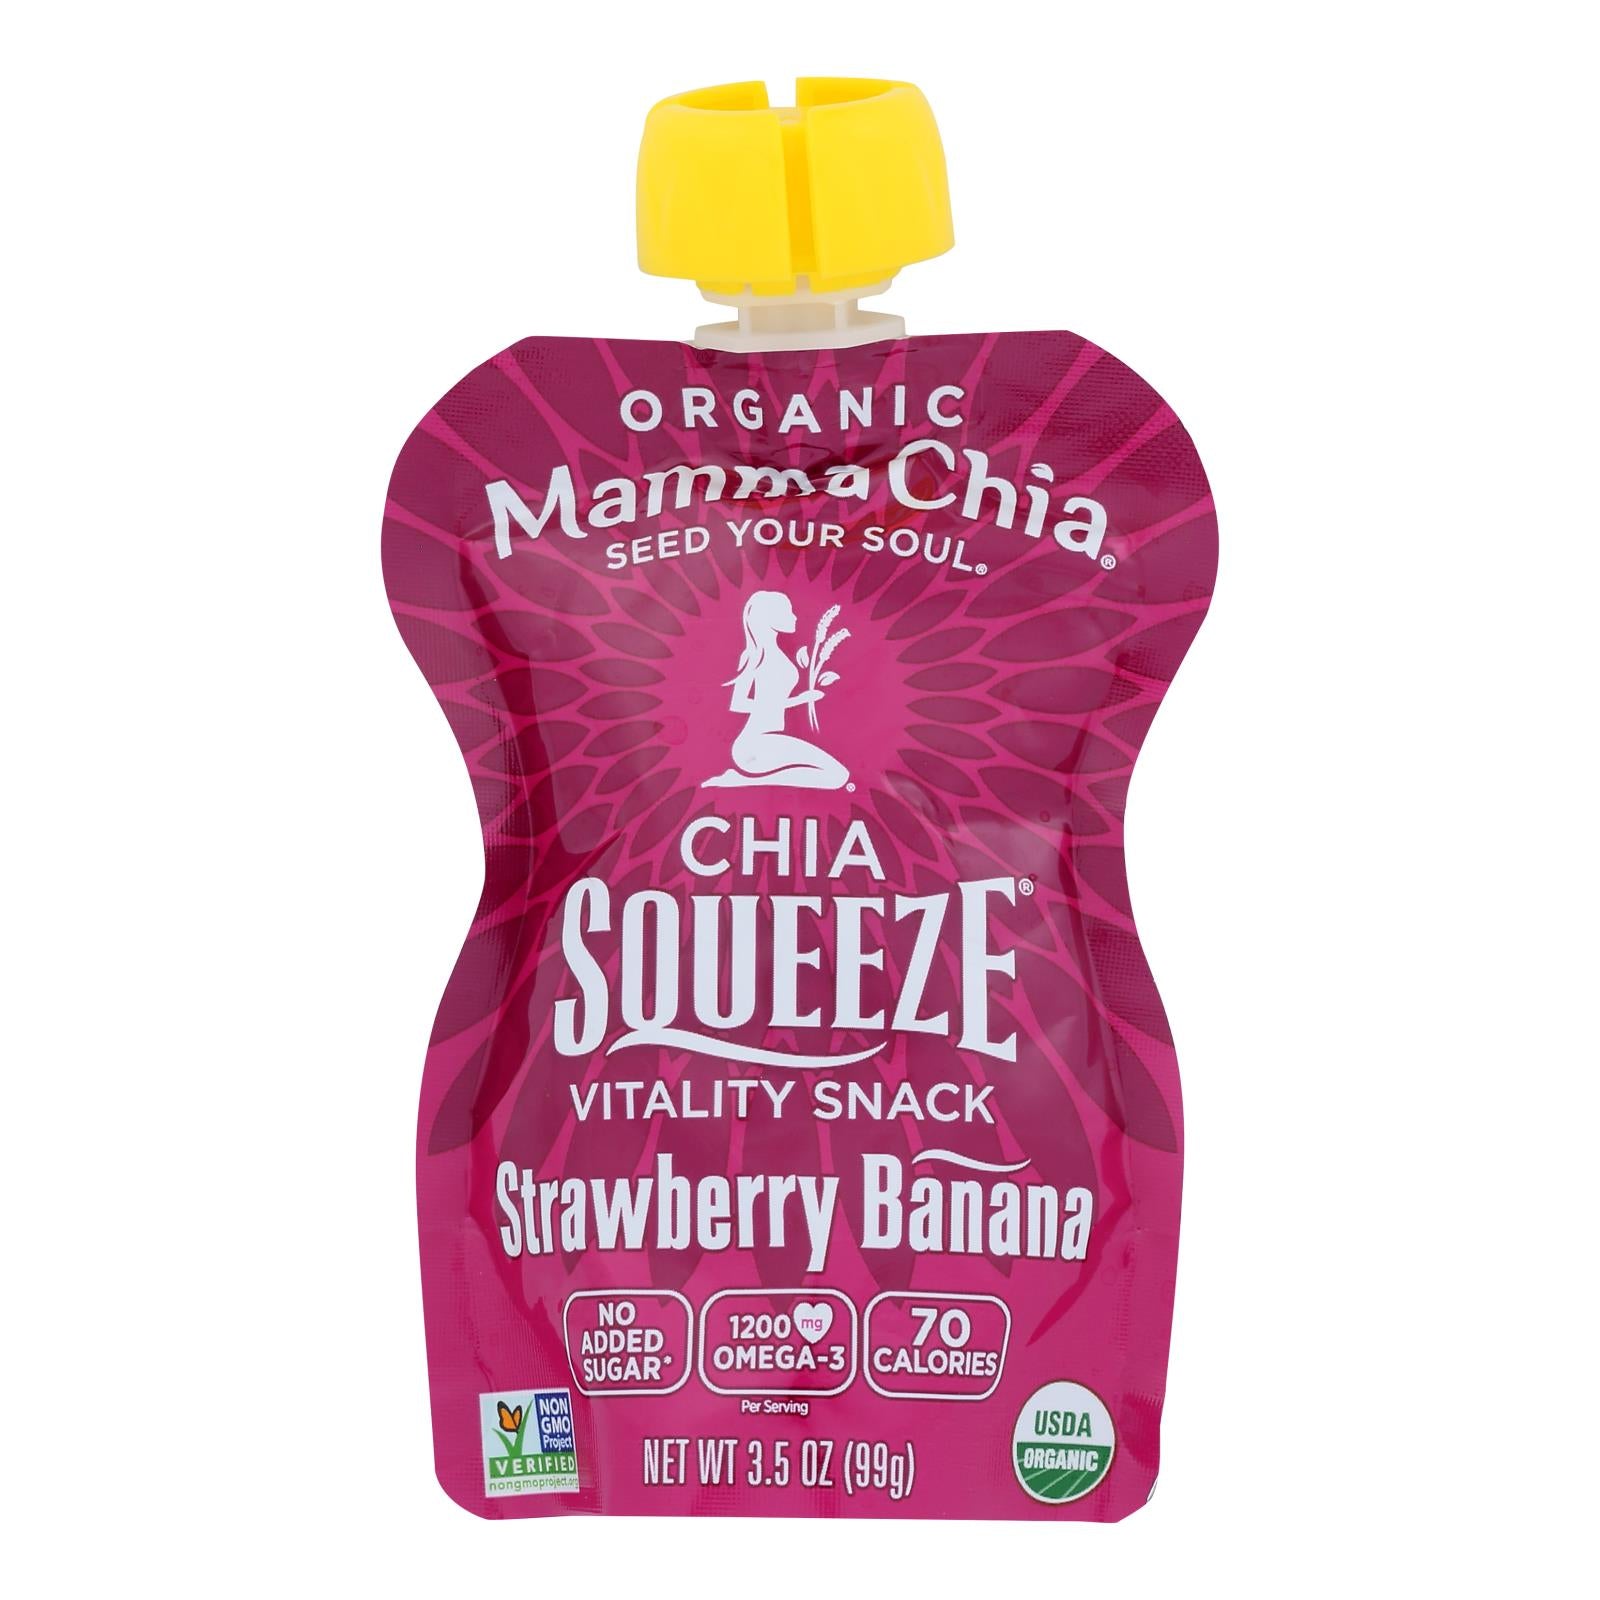 Mamma Chia, Mamma Chia Squeeze Vitality Snack - Fraise Banane - Caisse de 16 - 3.5 oz. (Pack de 16)